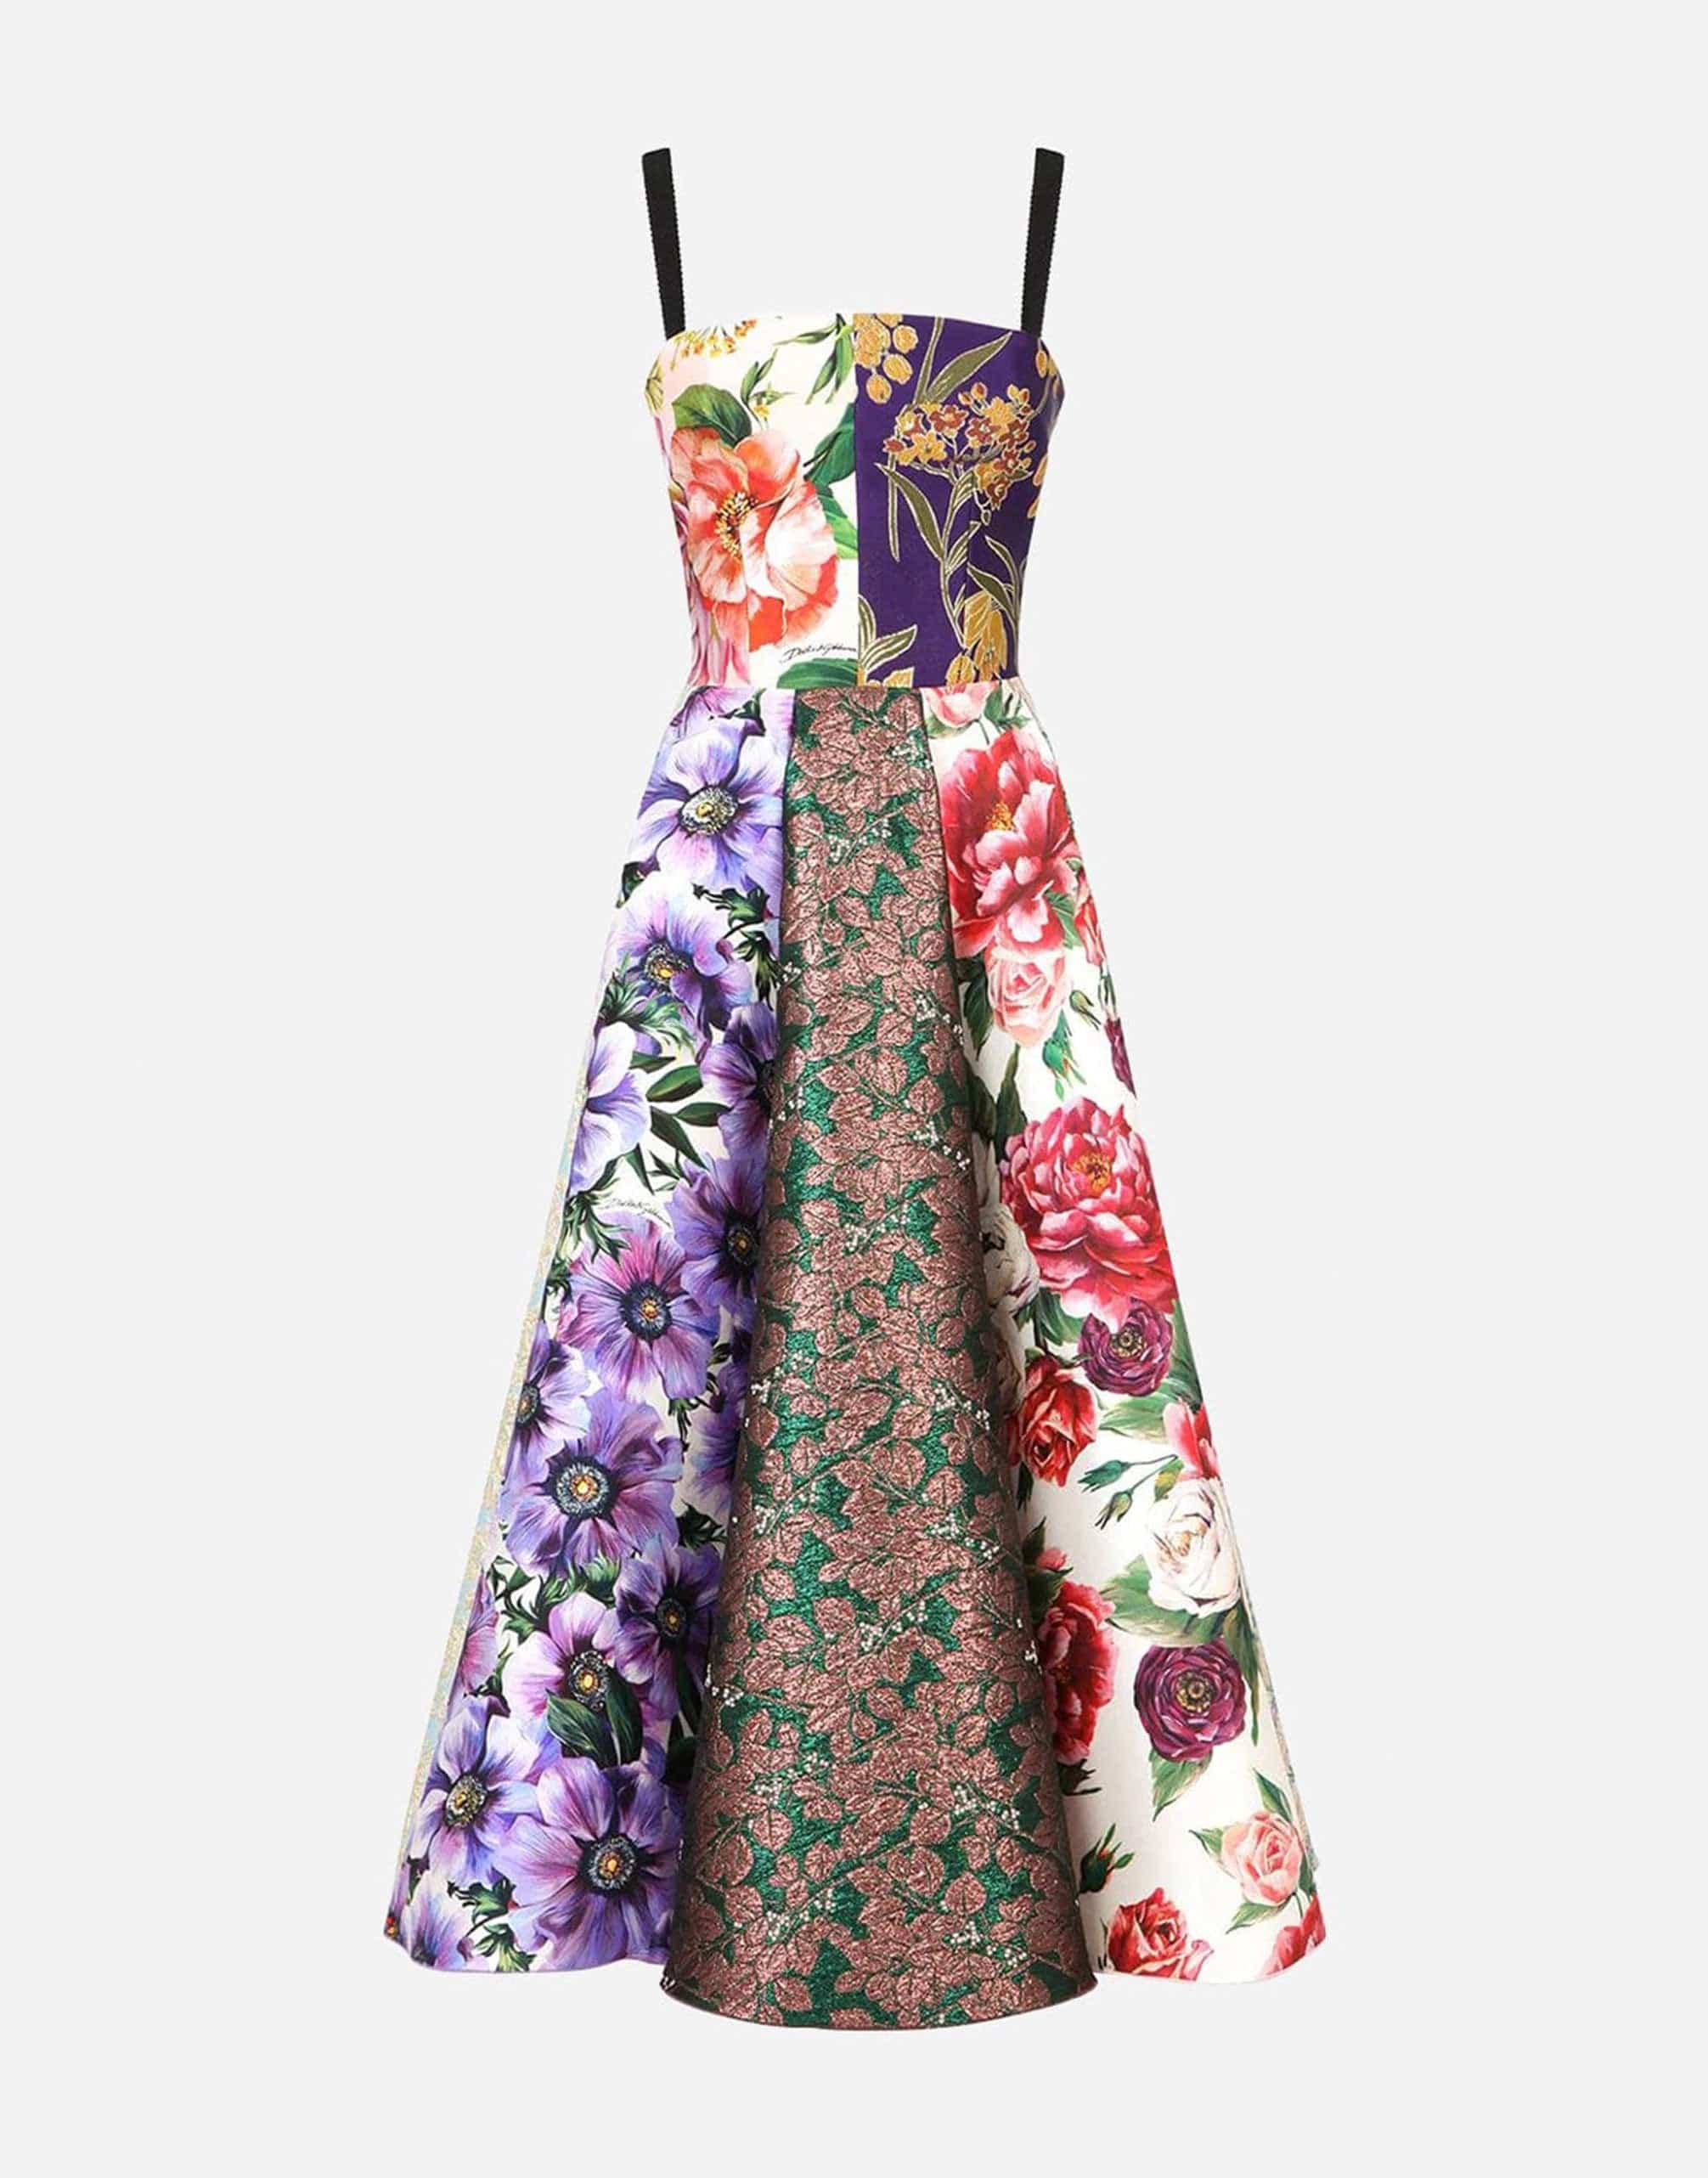 Dolce & Gabbana Patchwork Jacquard-Woven Dress